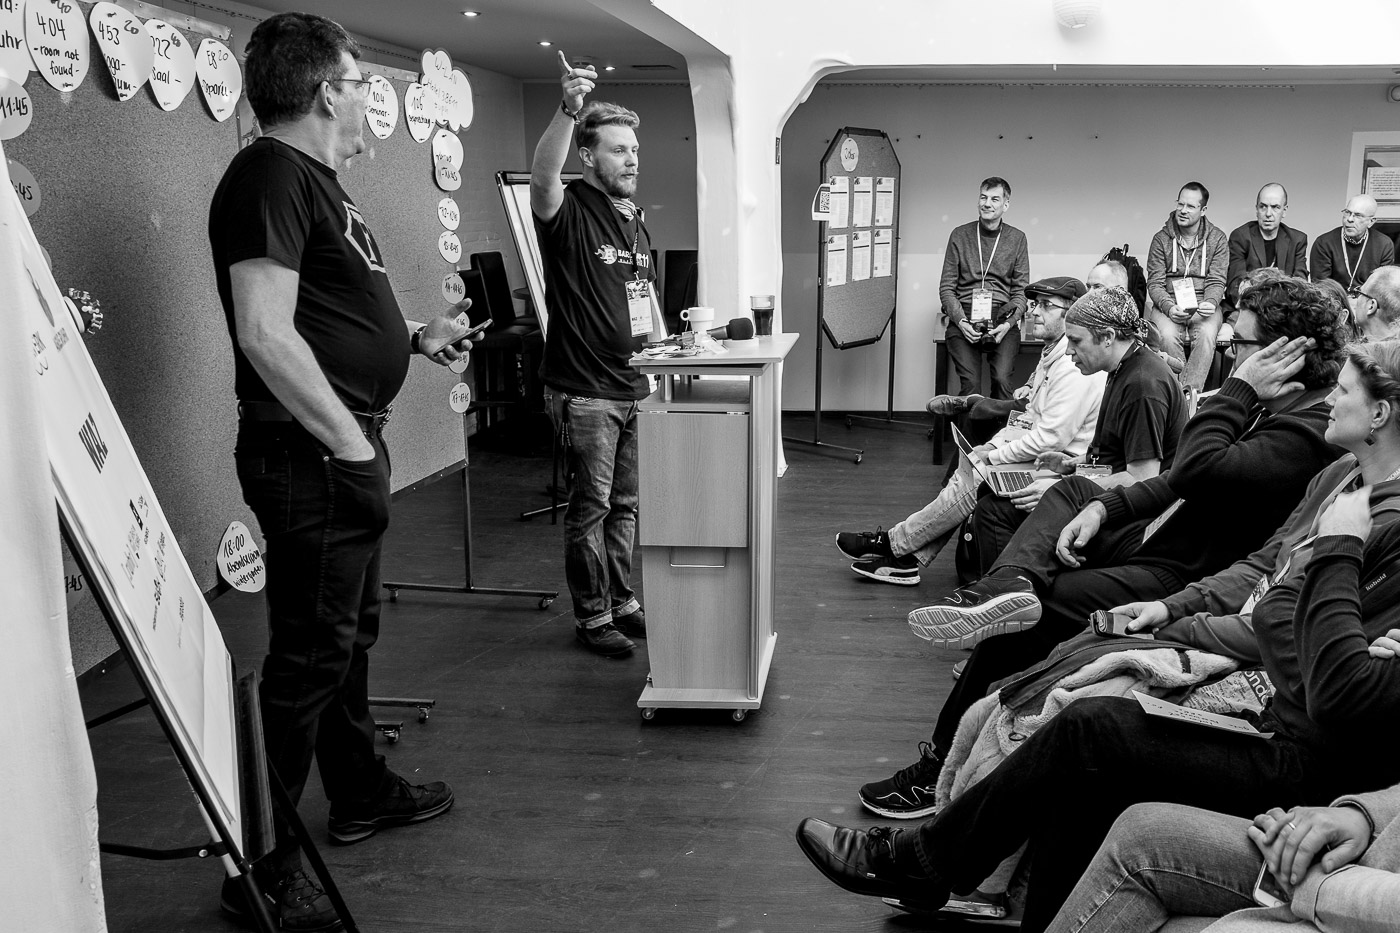 Berthold Barth explains how a barcamp works